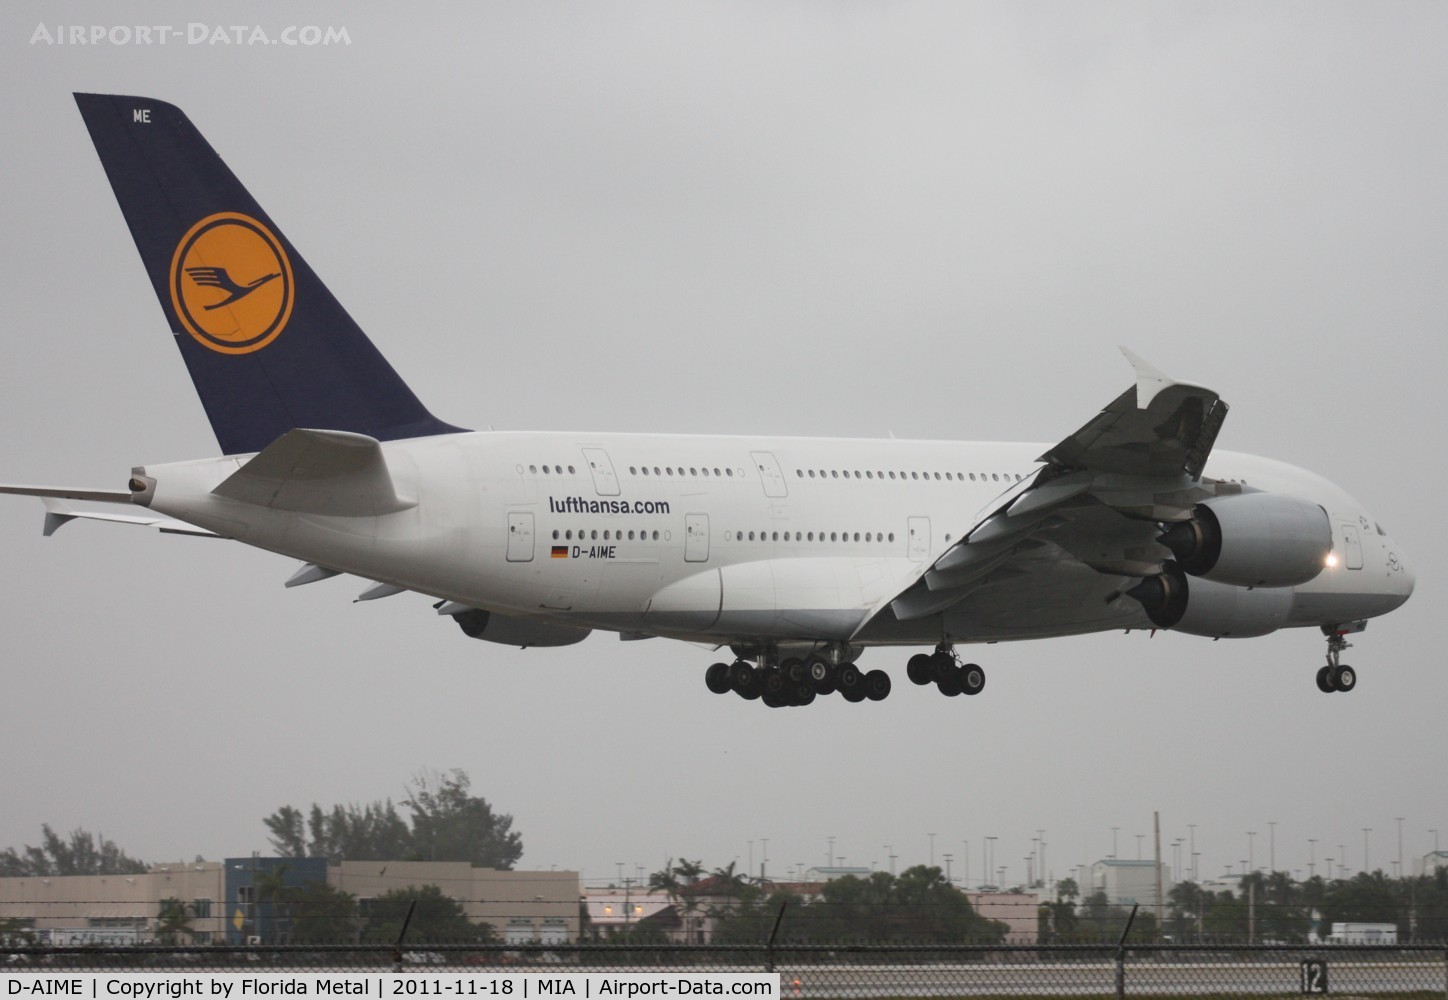 D-AIME, 2010 Airbus A380-841 C/N 061, Lufthansa A380 passing by a rainy El Dorado location